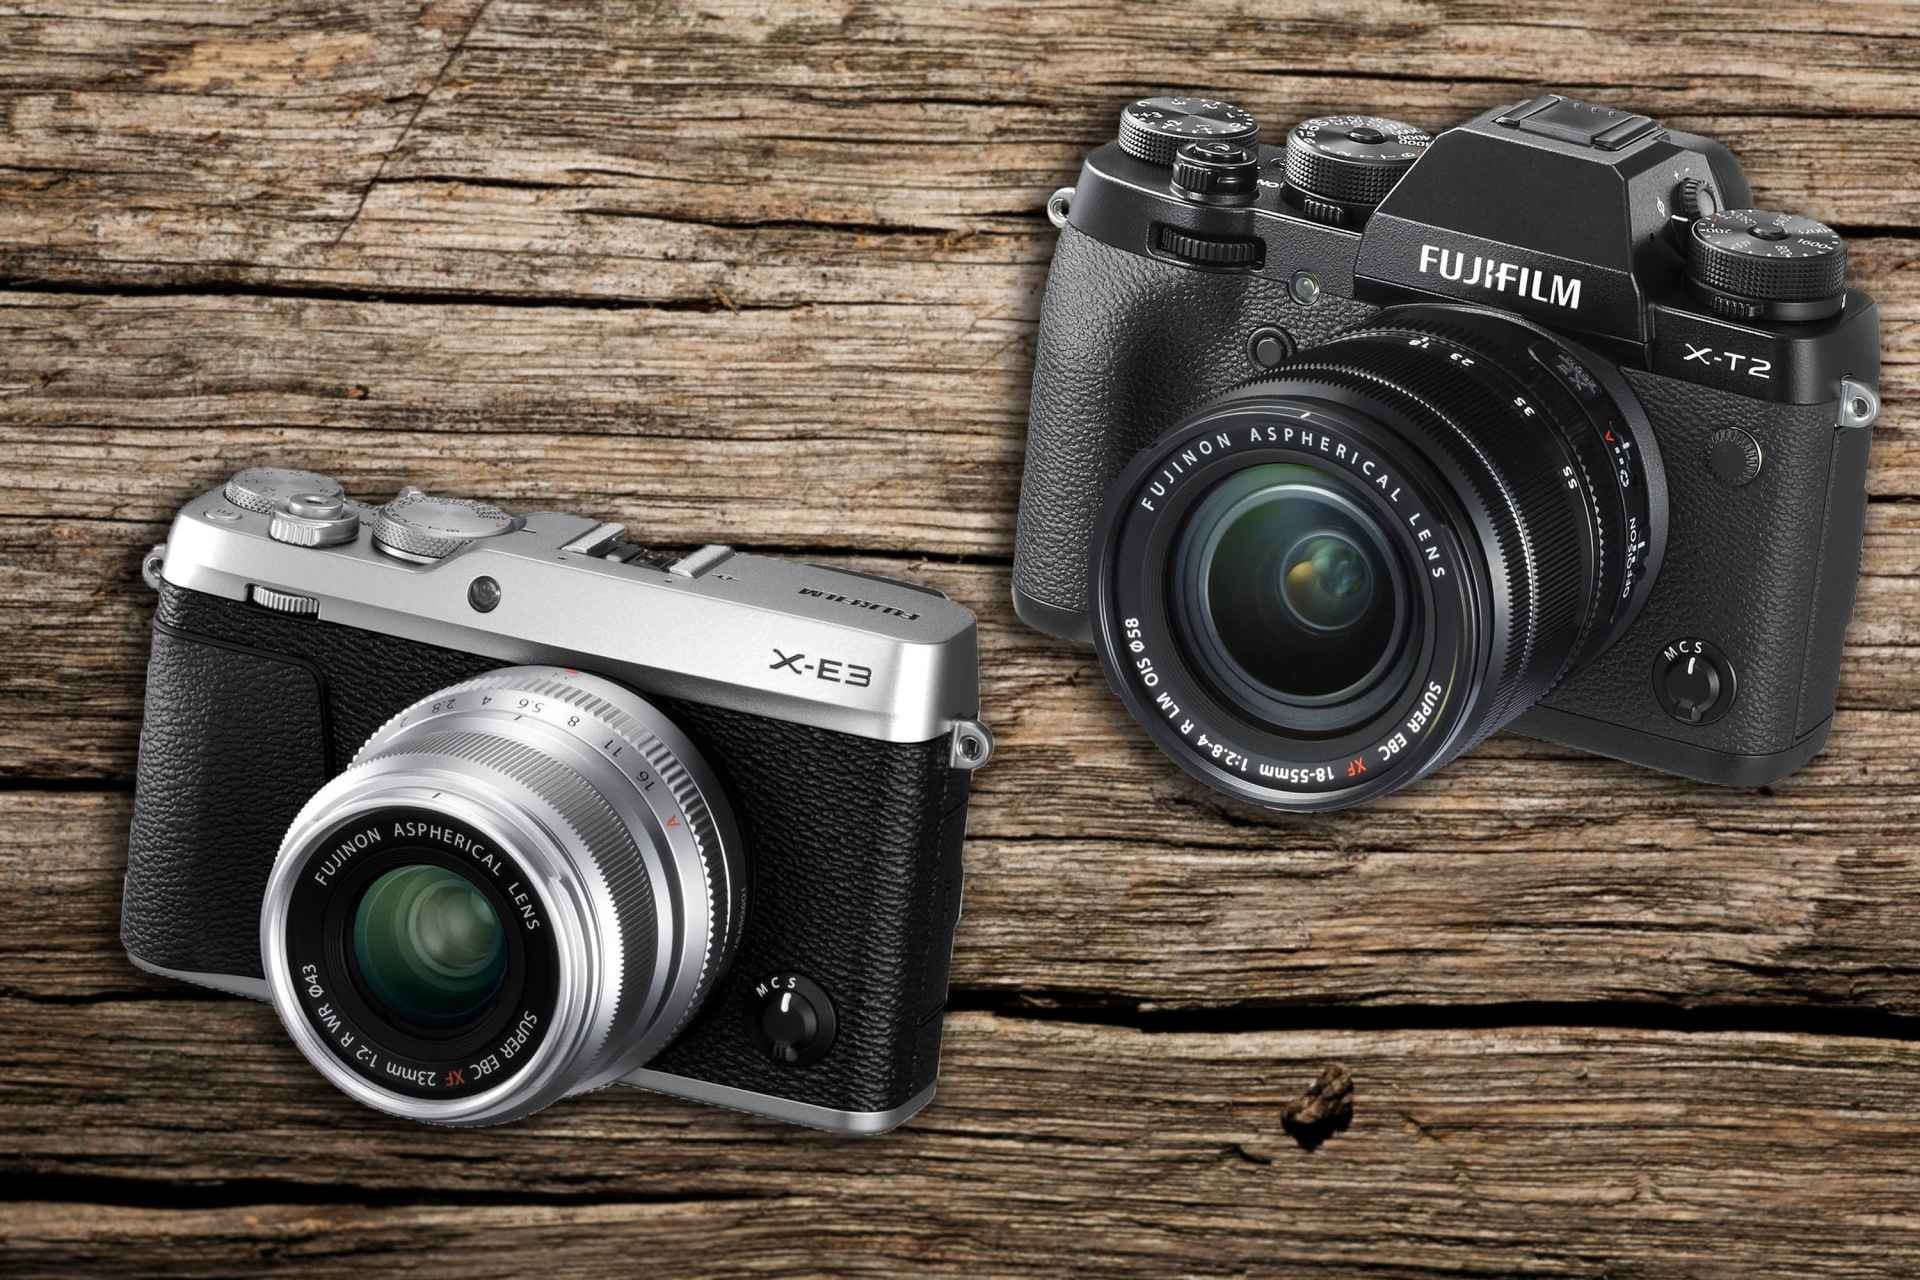 Fujifilm X-E3 в сравнении с Fujifilm X-T2 - что лучше?